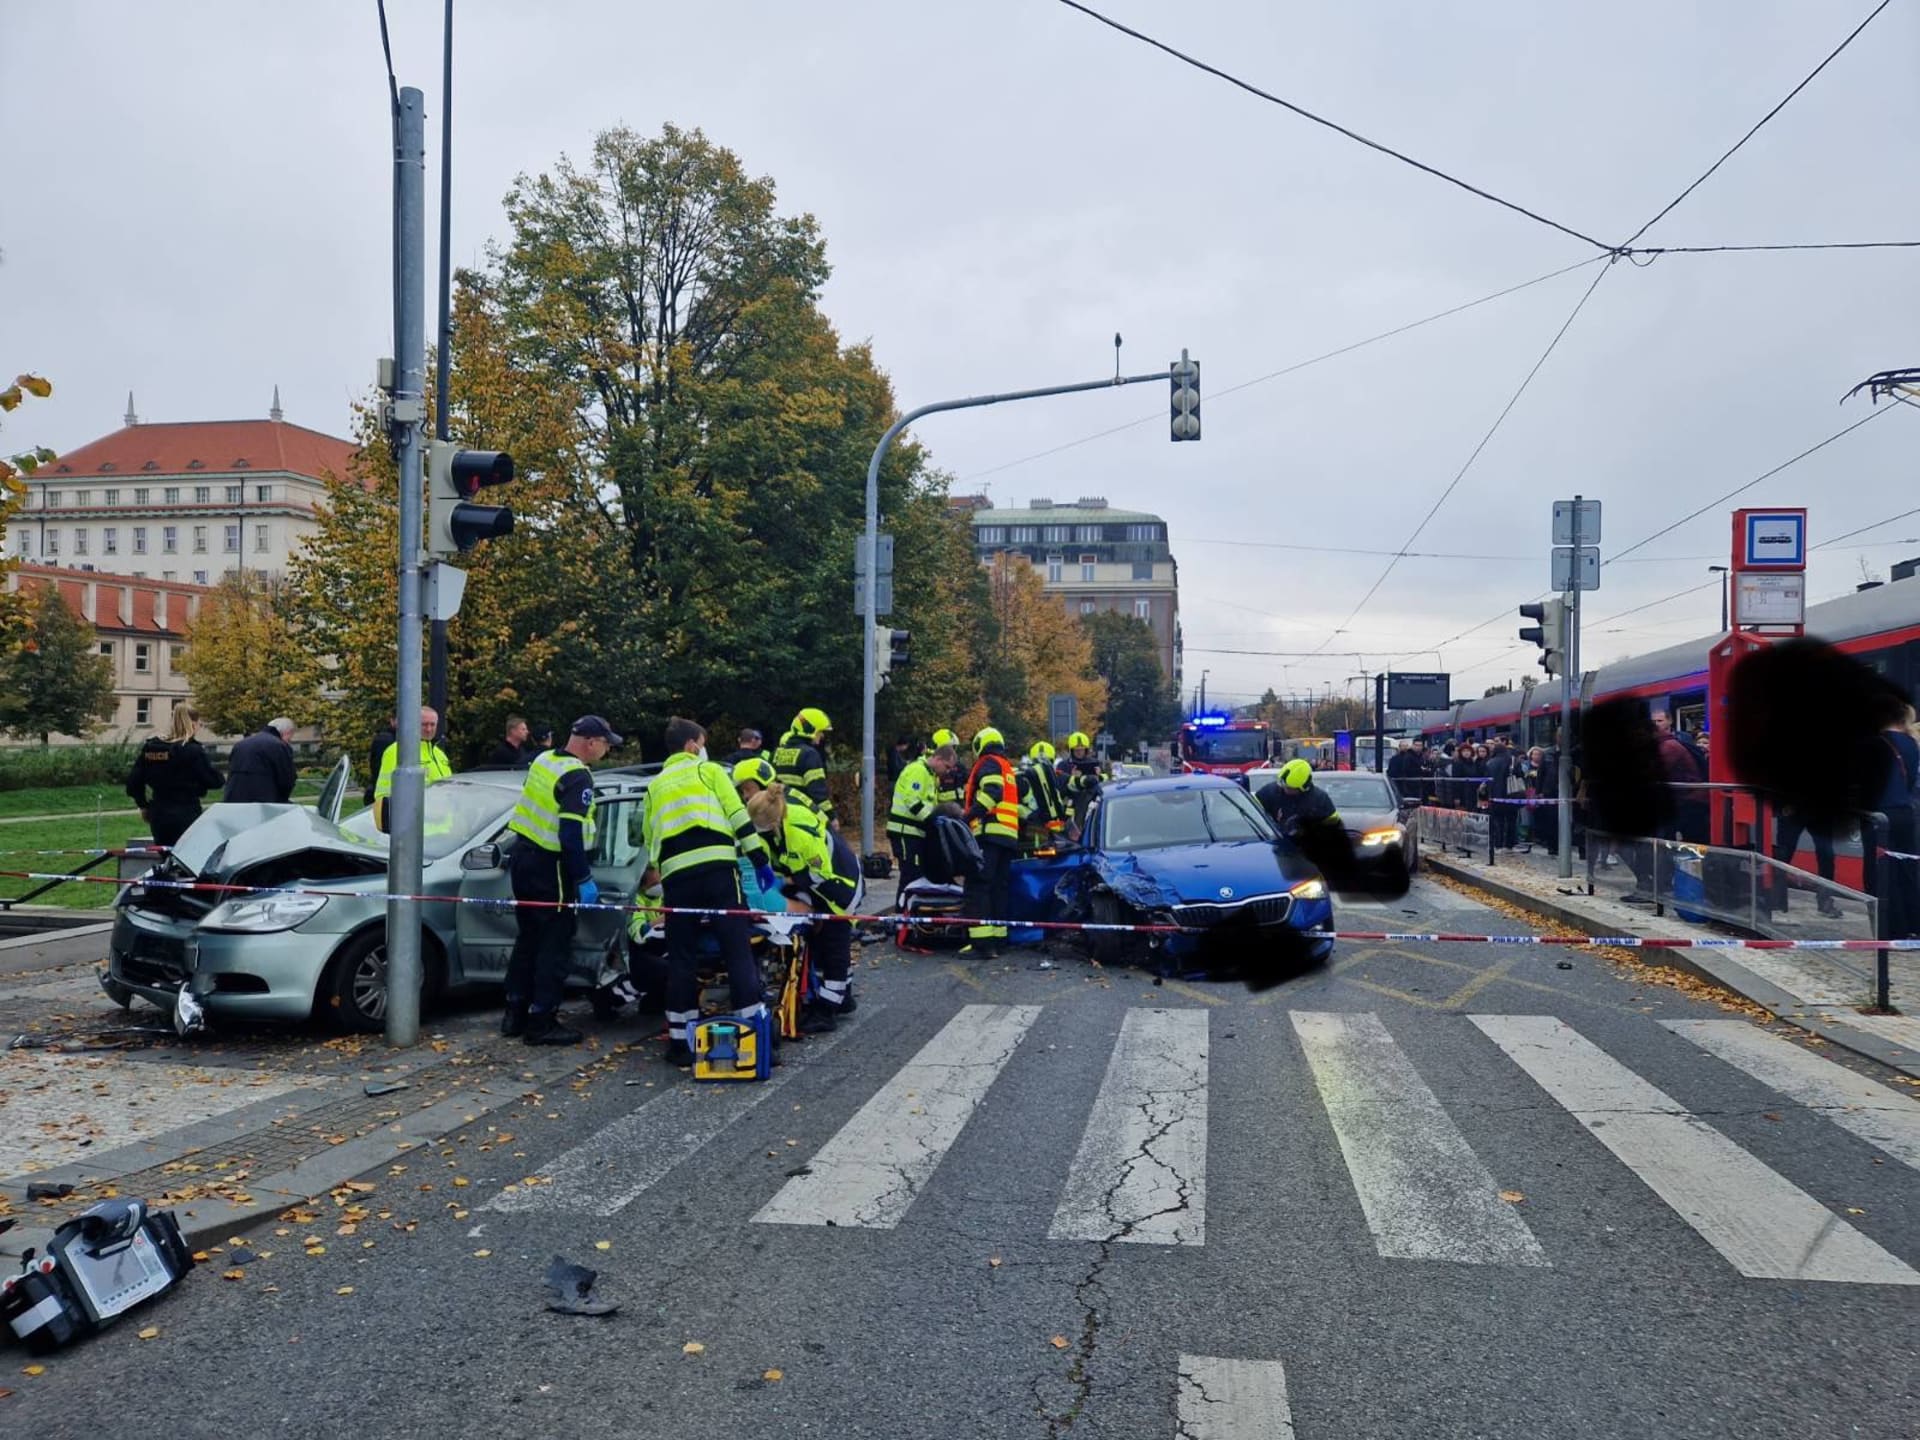 Hromadná nehoda šesti aut na Palackého náměstí v centru Prahy